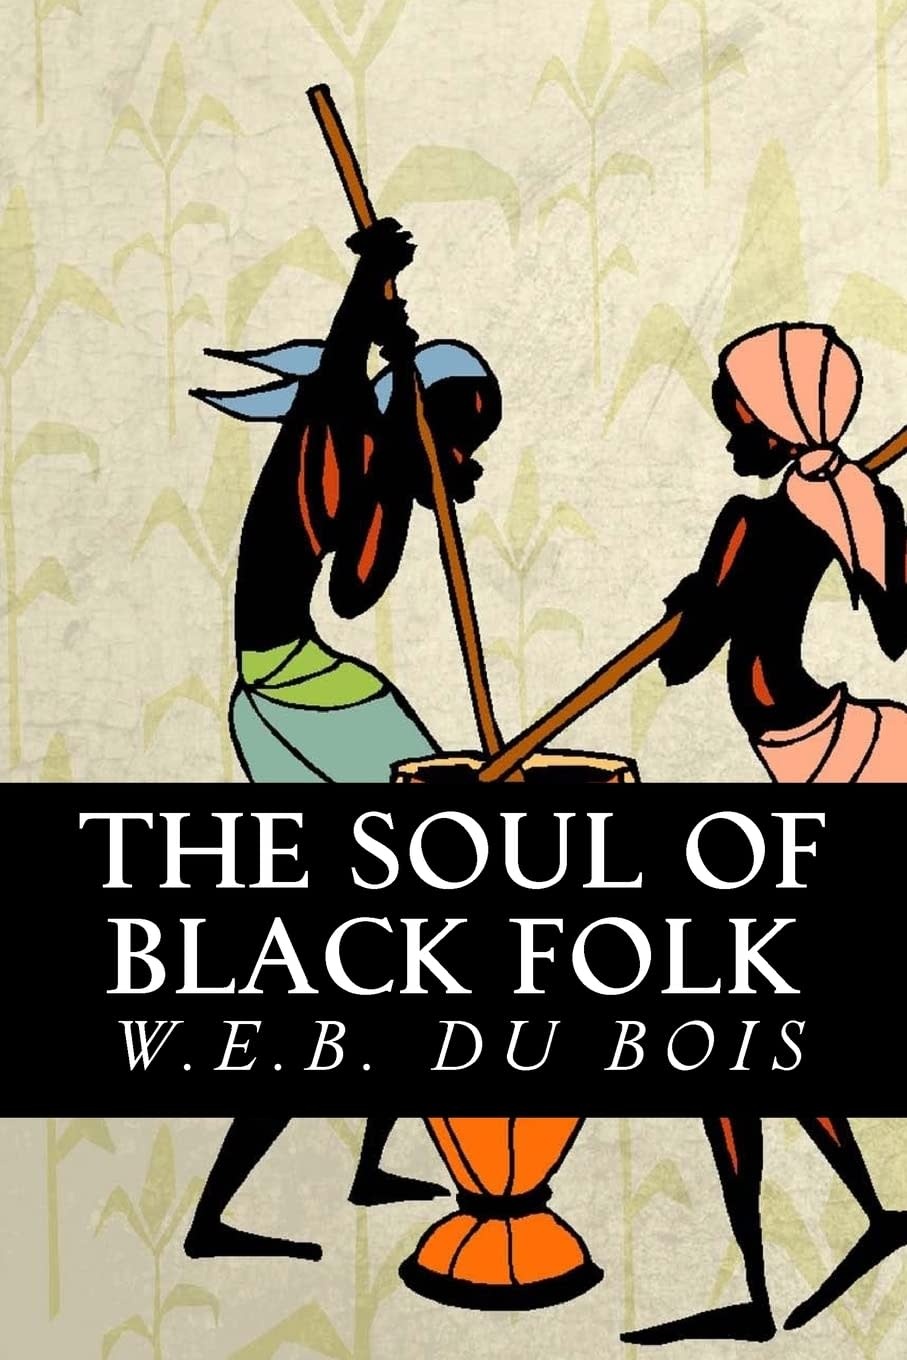 The Soul of Black Folk by W.E.B Du Bois